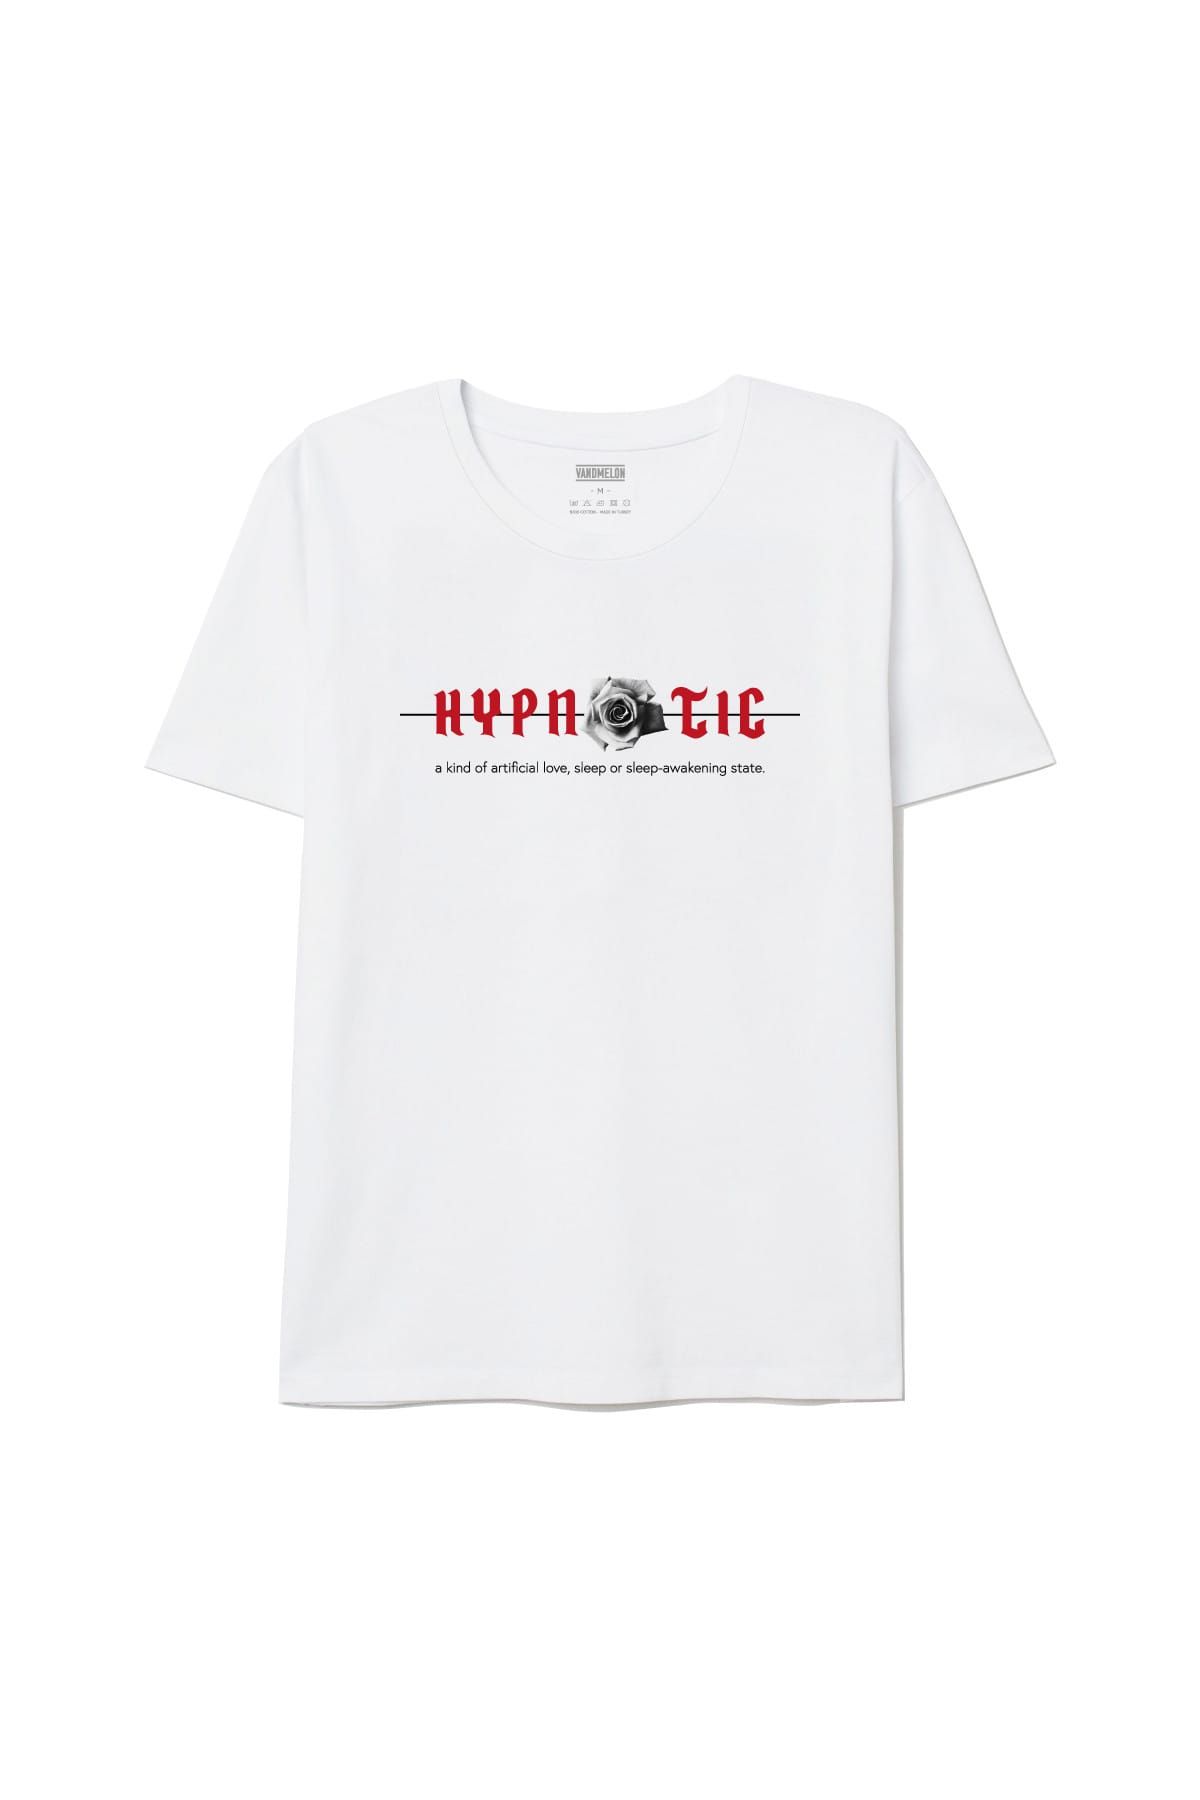 Vandmelon Unisex Hypnotic Beyaz T-shirt VMU0091